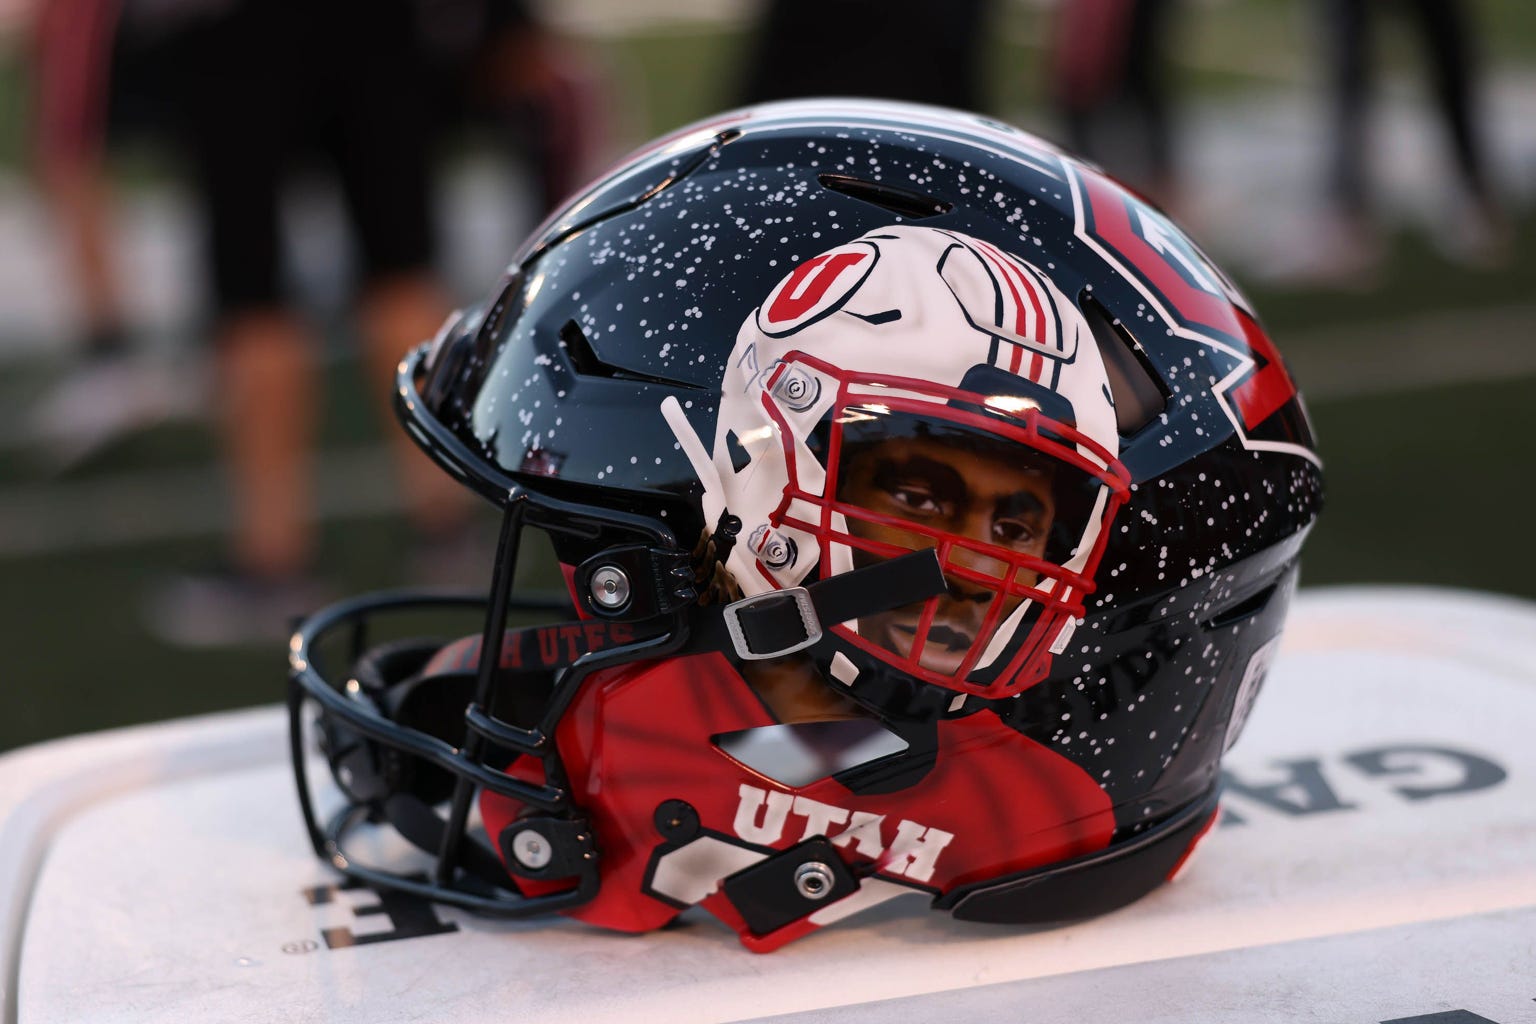 Photo Gallery: USC Trojans at Utah Utes football game